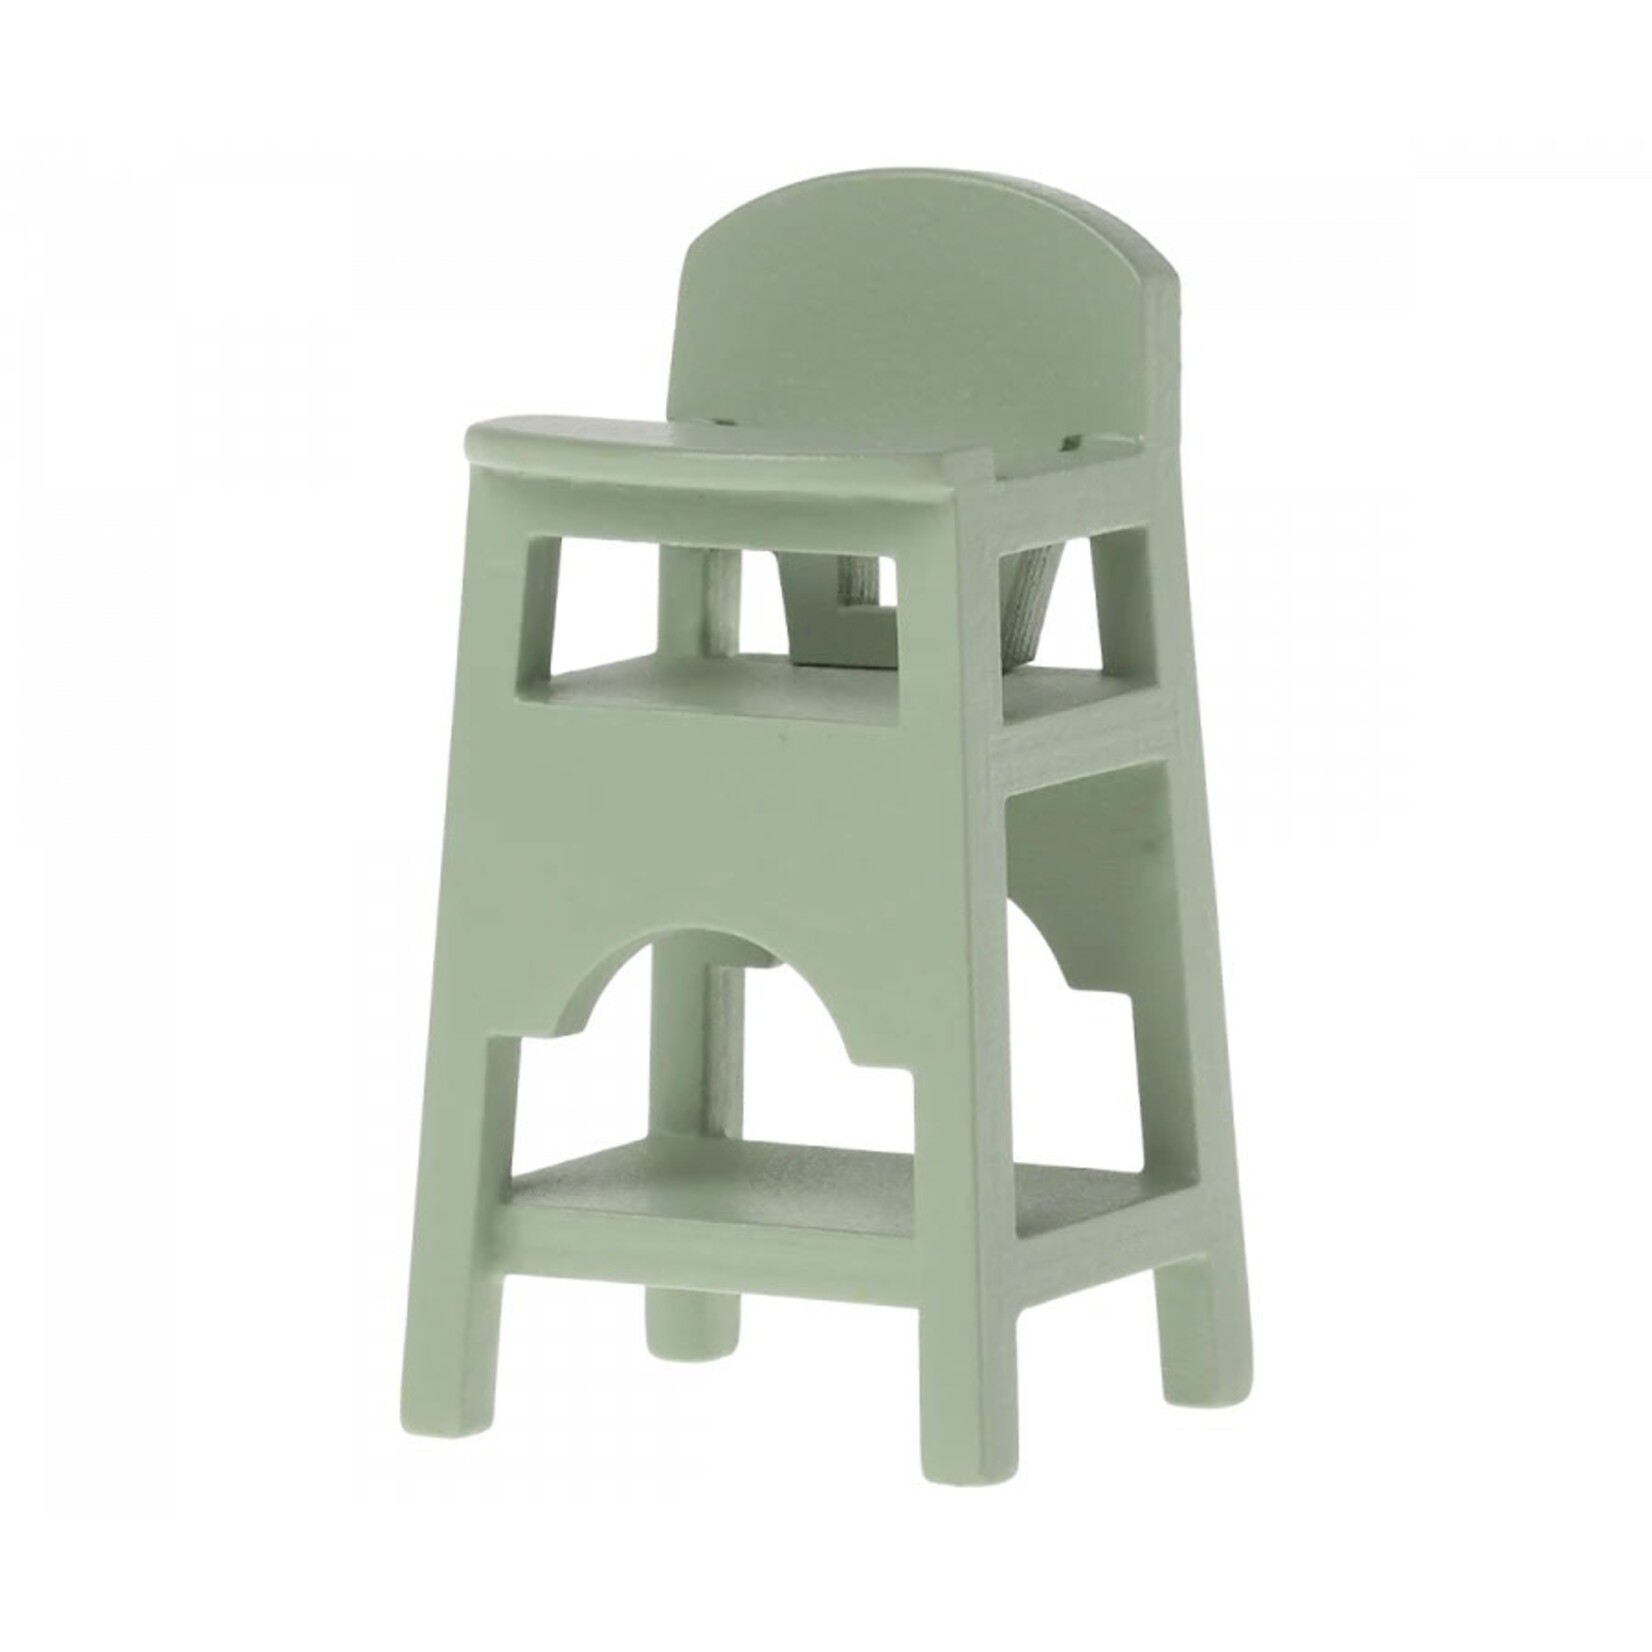 Maileg High chair, Mouse - Mint